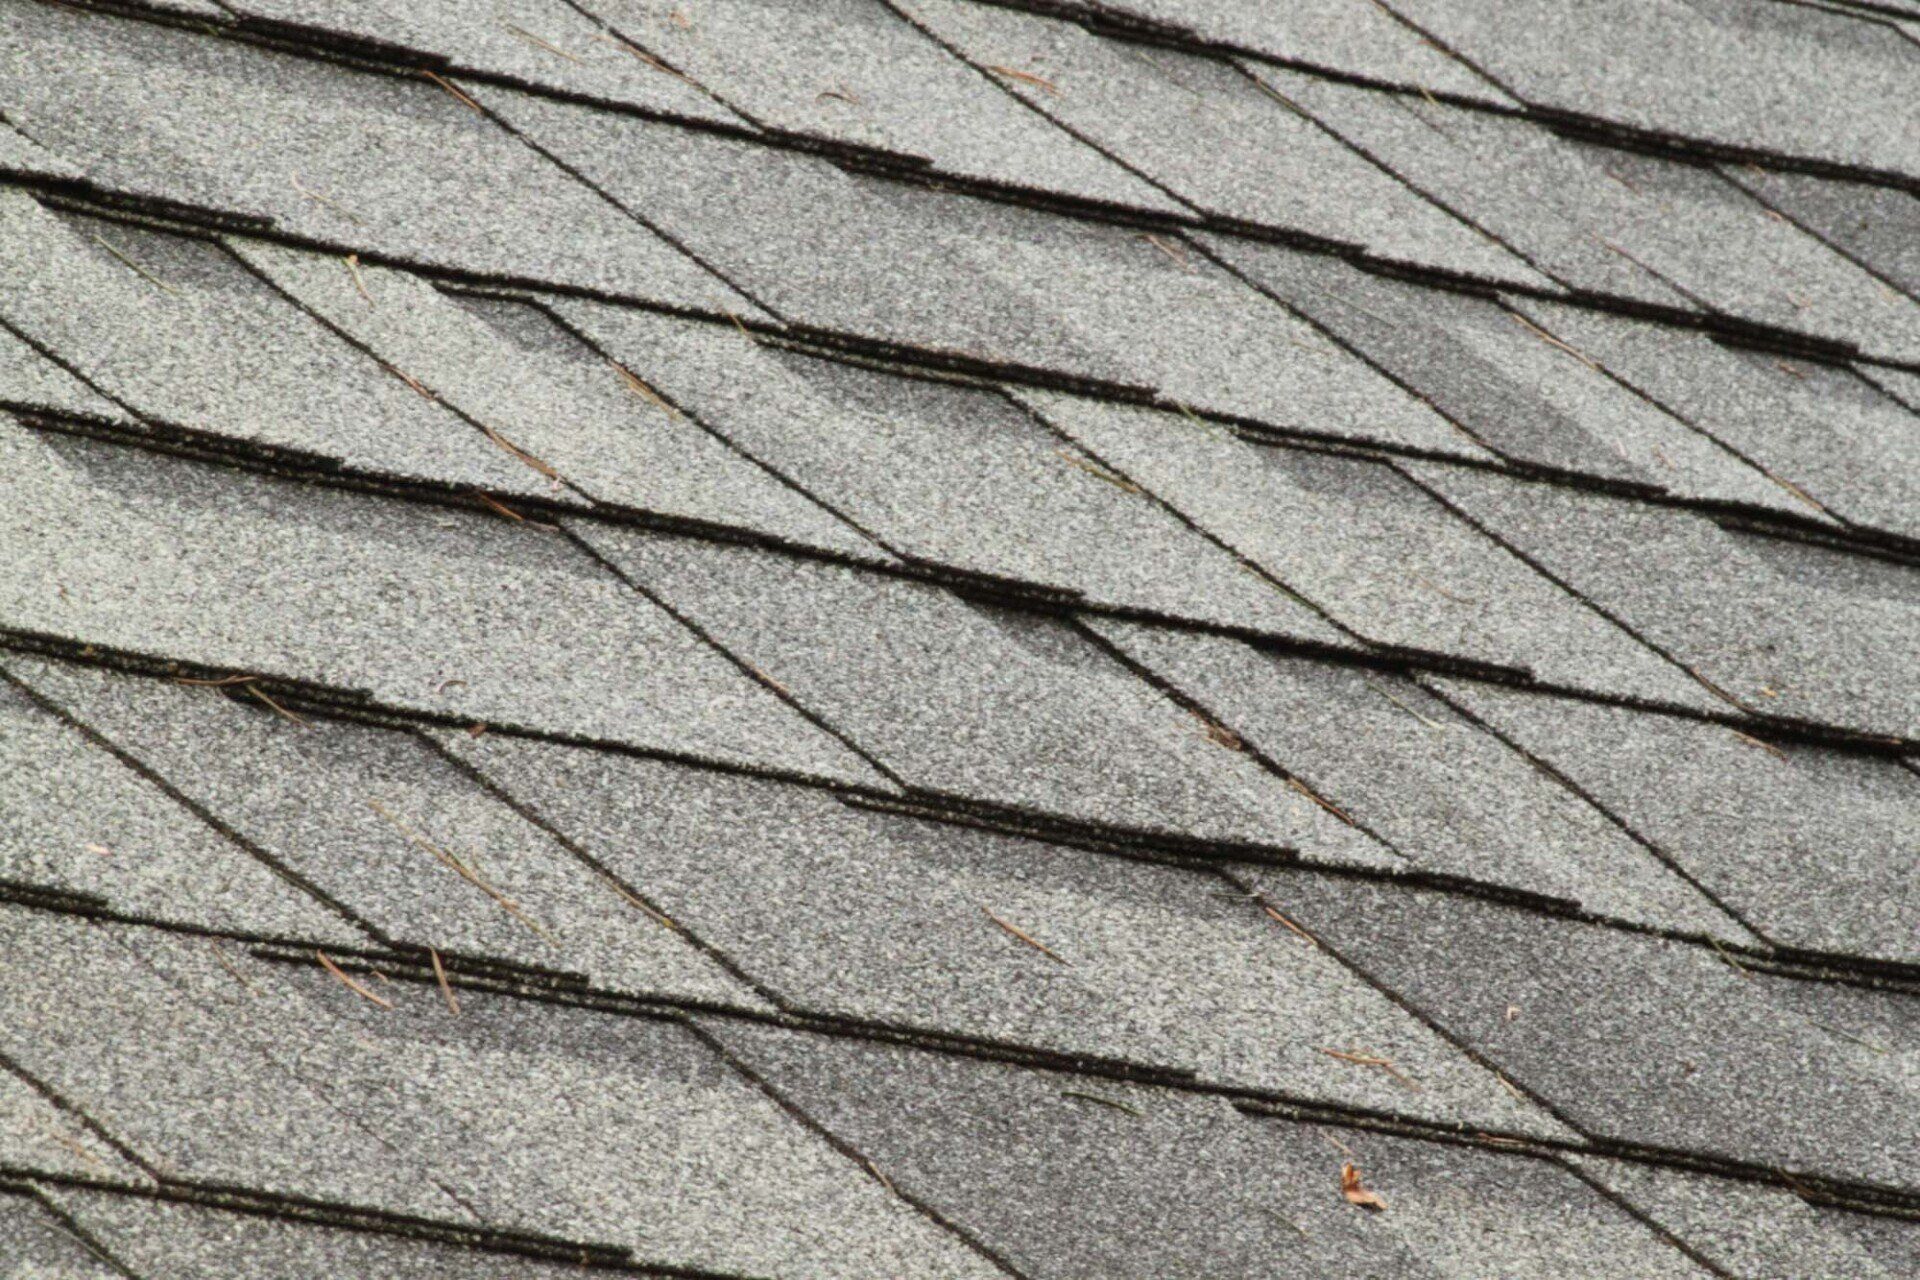 asphalt shingles on a roof 